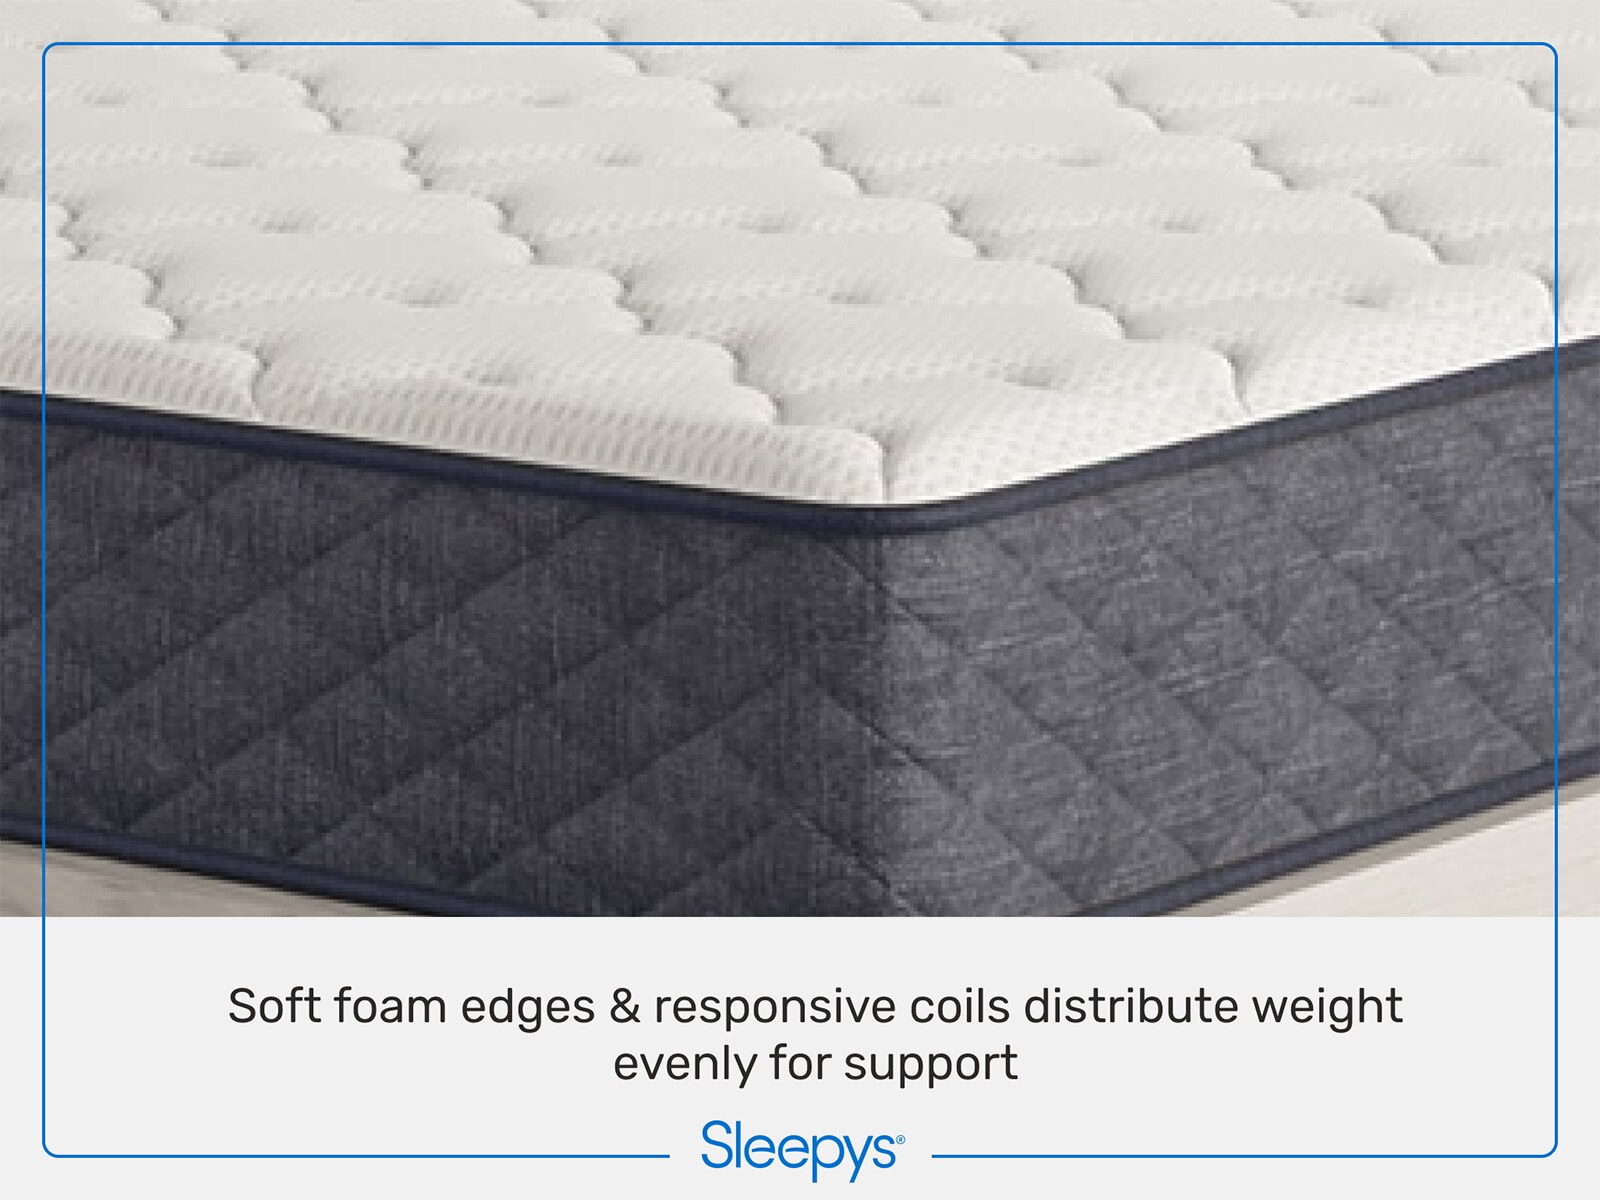 selepy's rest 9.5 firm innerspring mattress